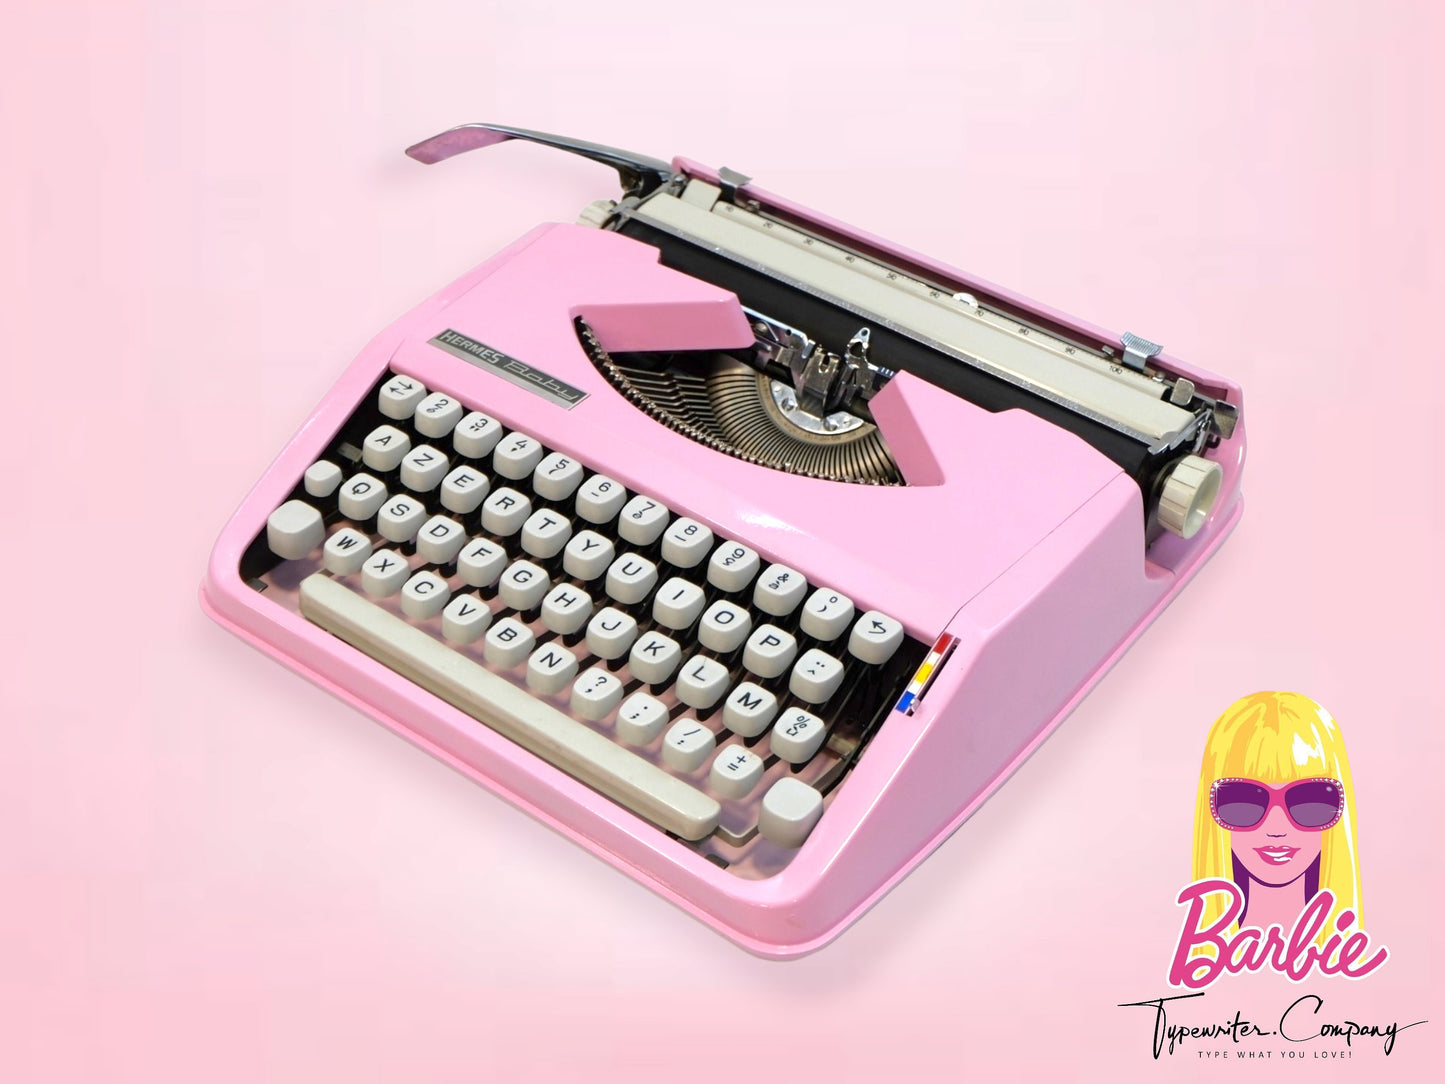 CURSIVE Hermes Baby Barbie Pink - Refurbished - Perfectly Working Typewriter, Vintage Manual Portable Professionally Serviced